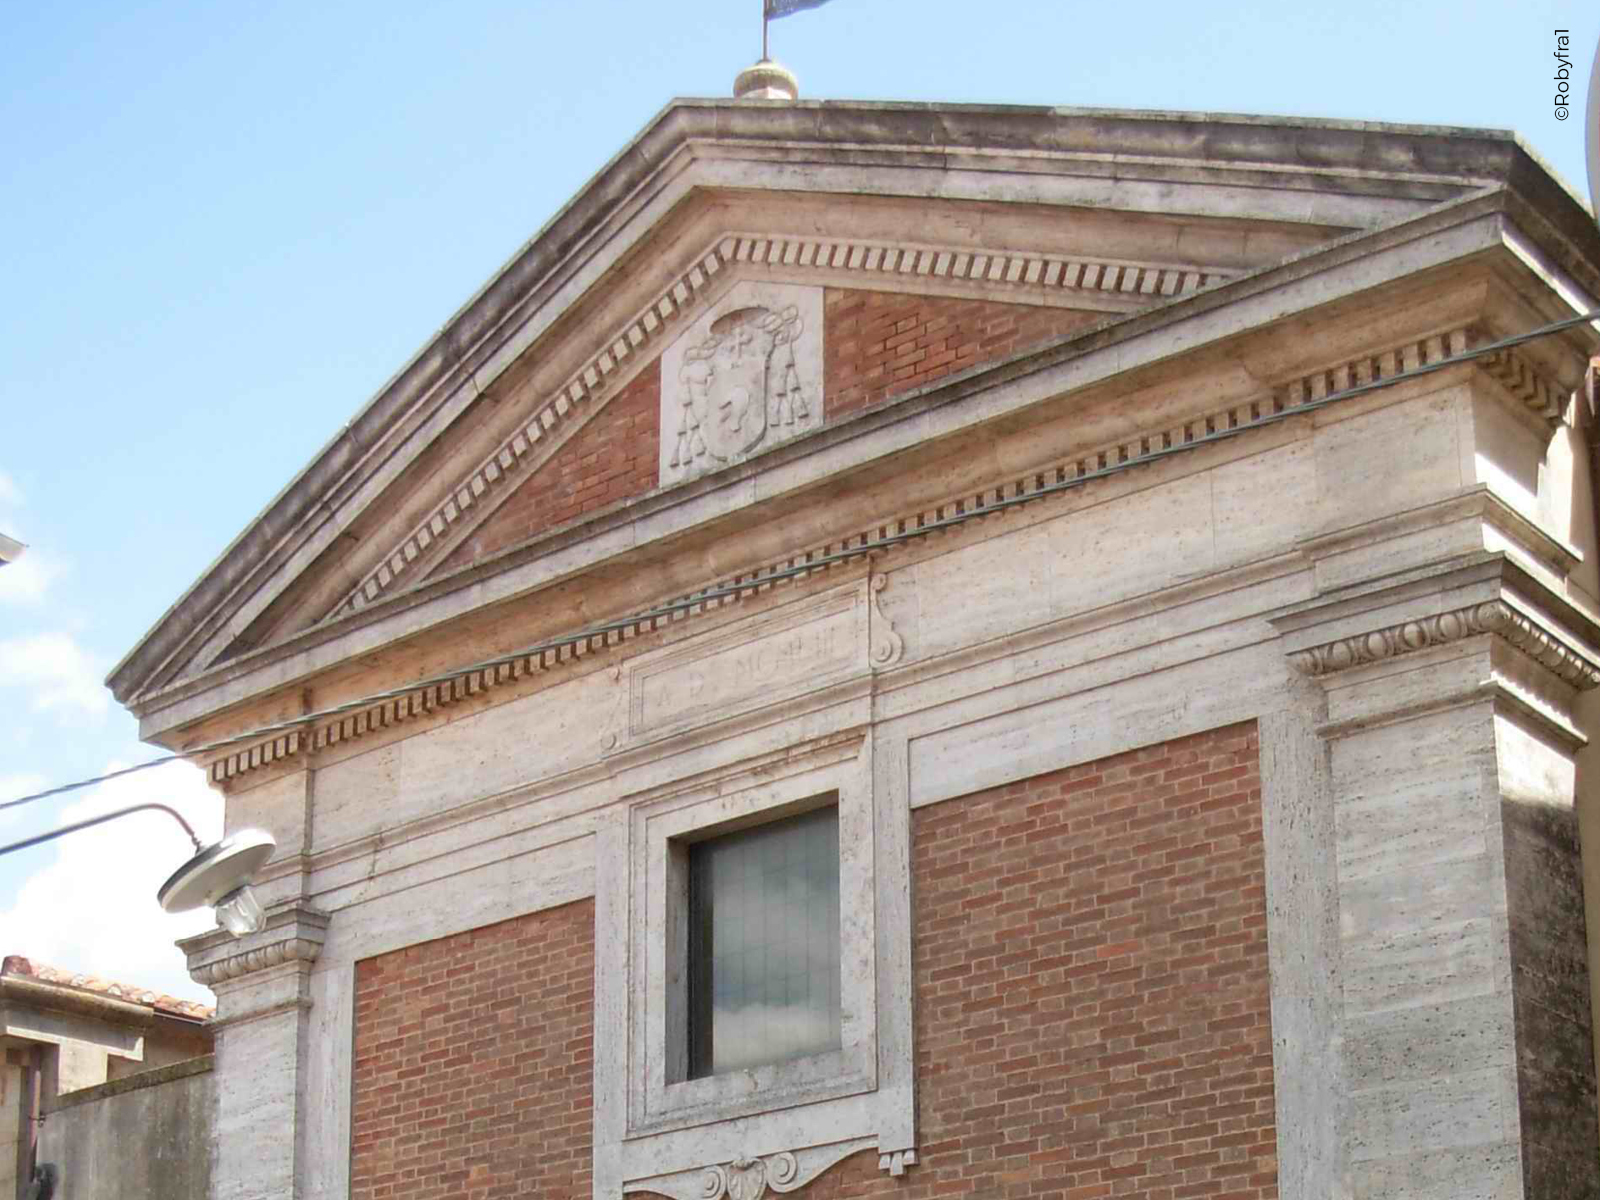 La façade de l'église de San Niccolò